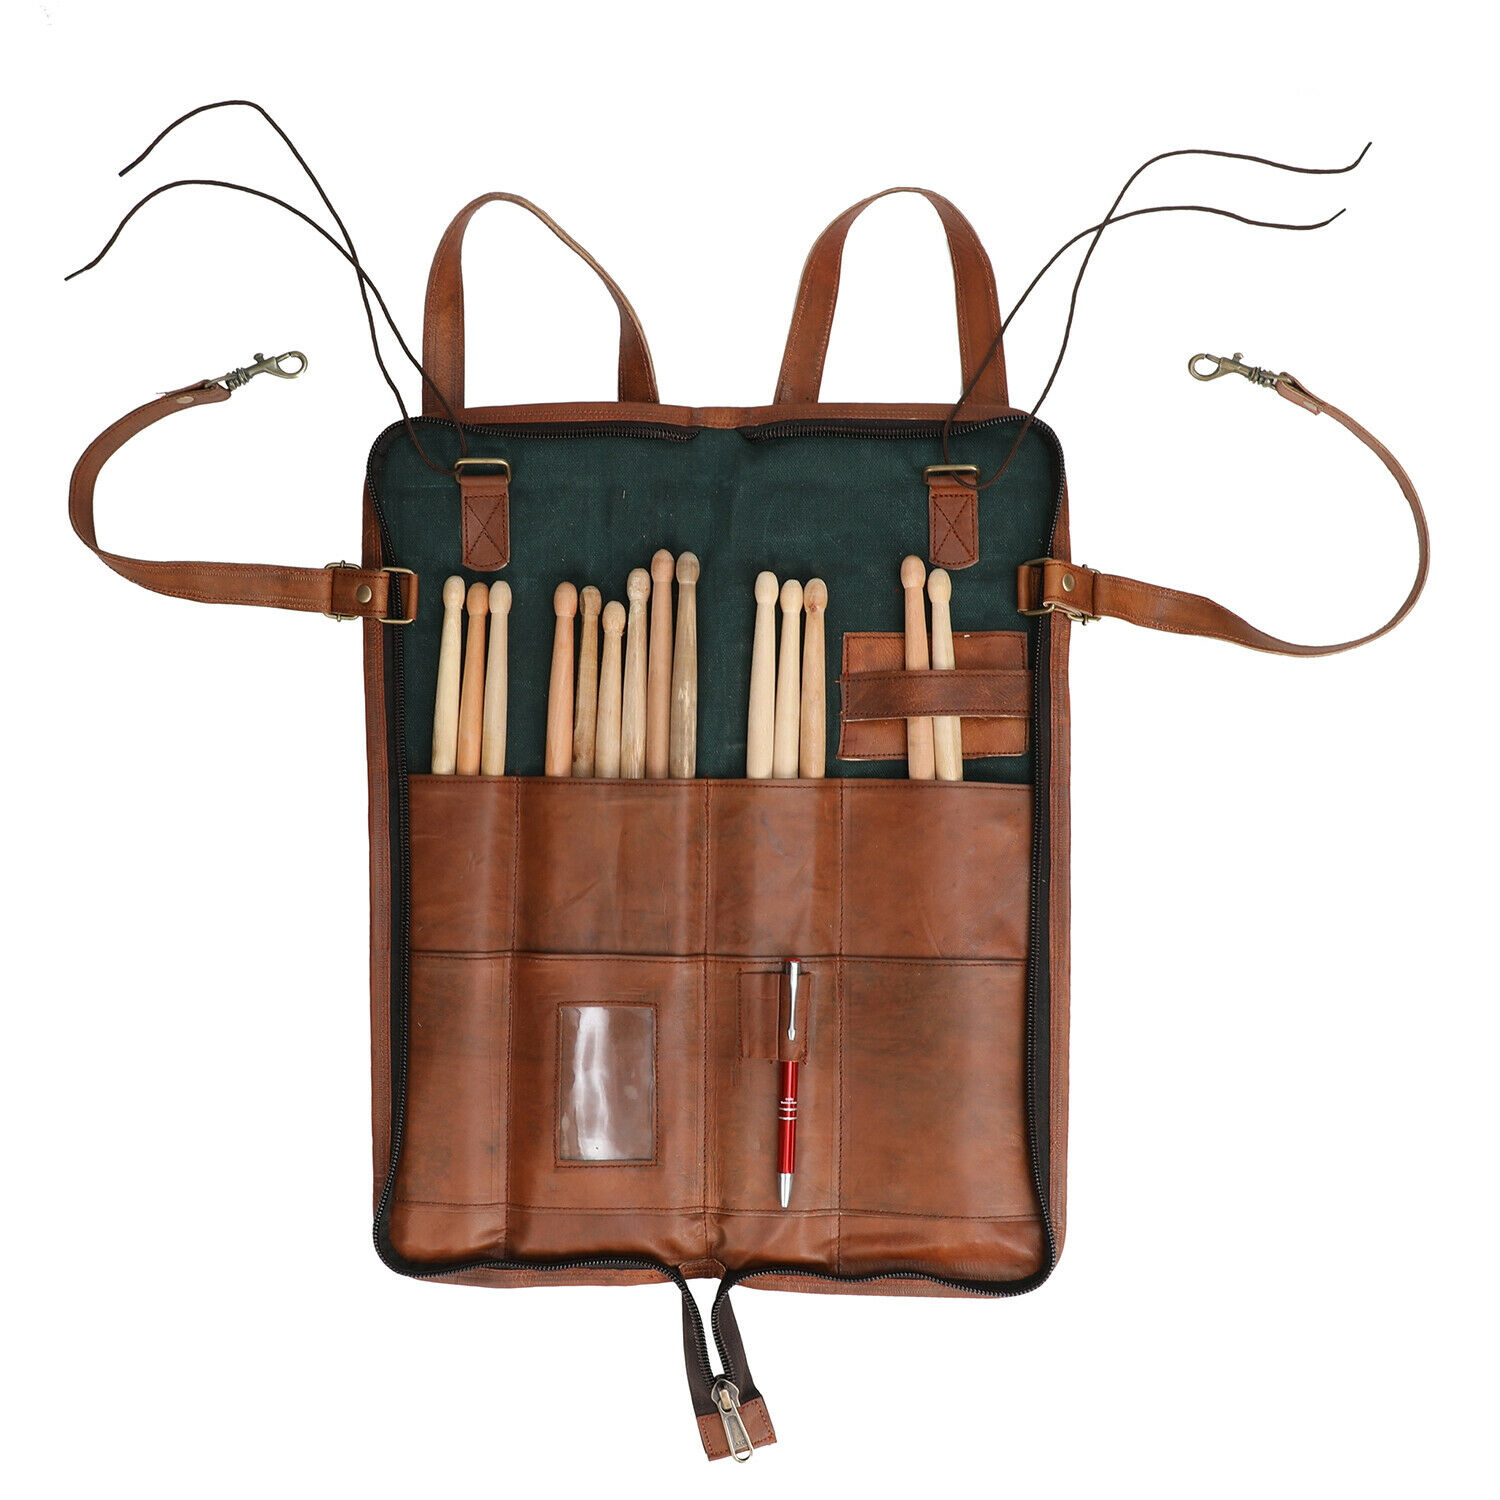 Stick Bag, Leather Stick Bag, Drum Stick Bag